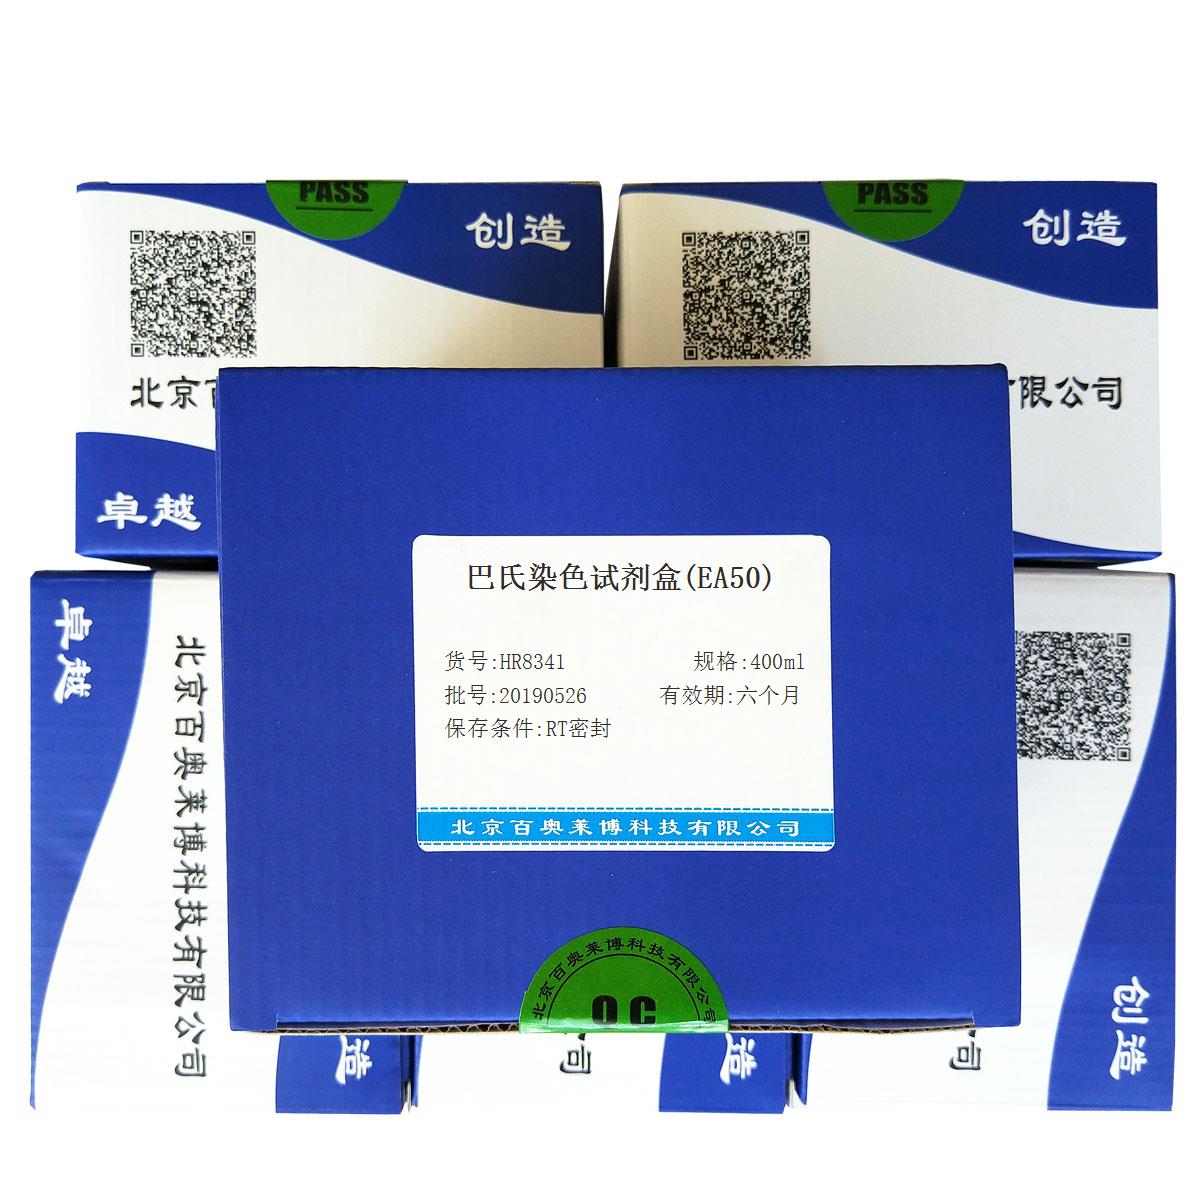 巴氏染色试剂盒(EA50)北京价格